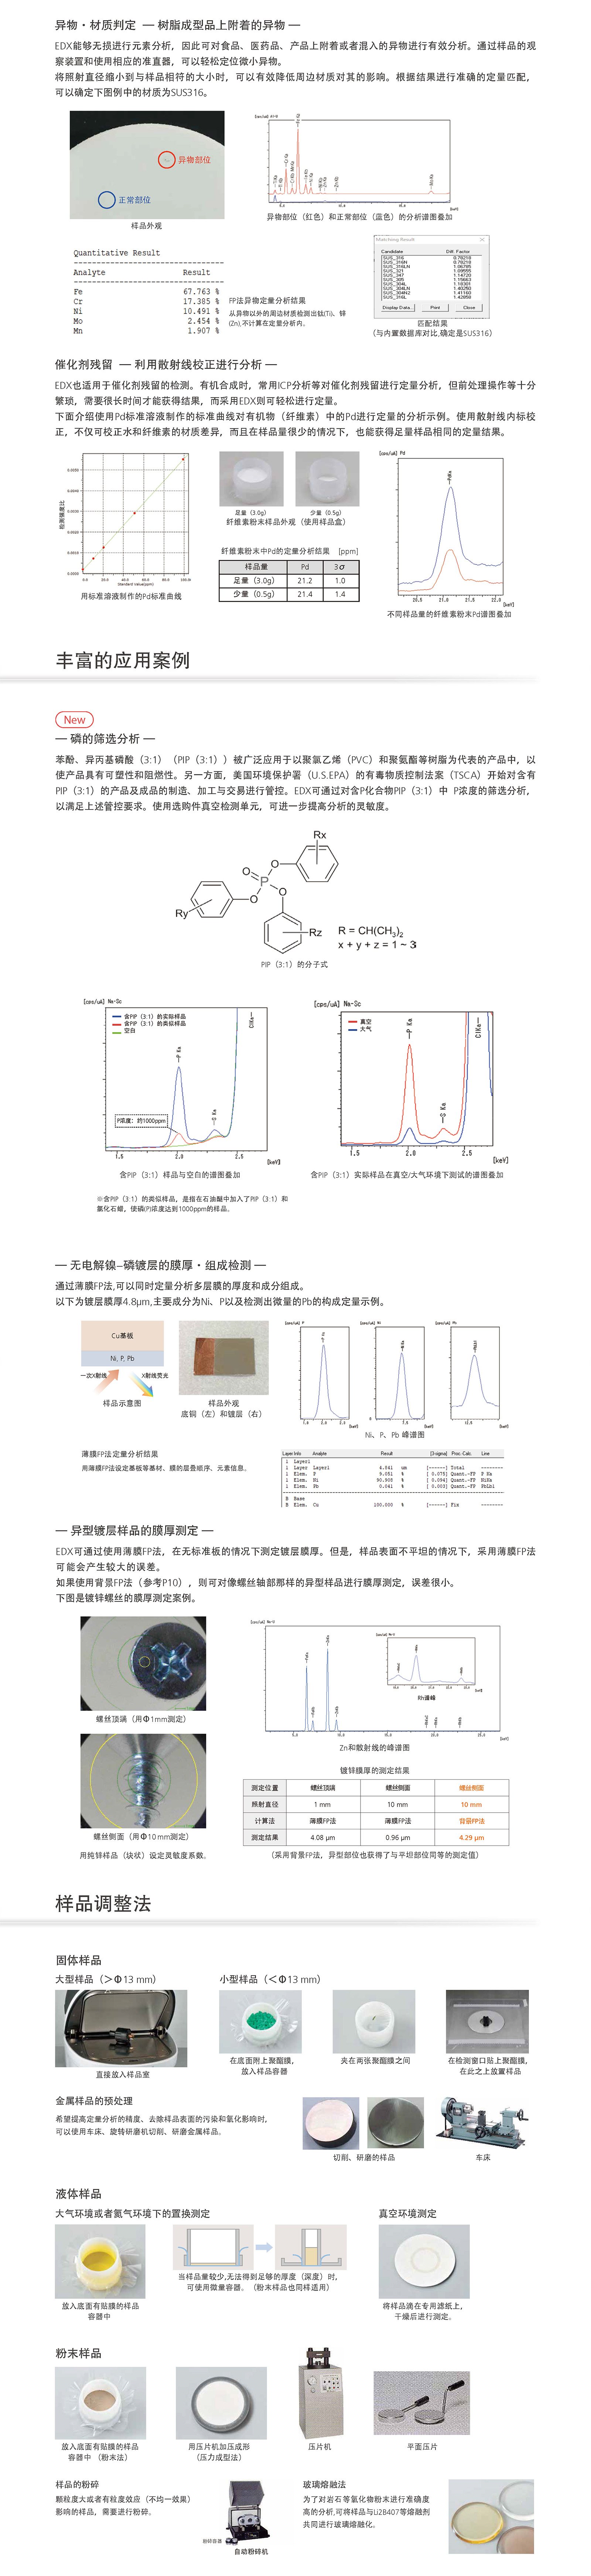 EDX-7200能量色散型X射线荧光光谱仪5